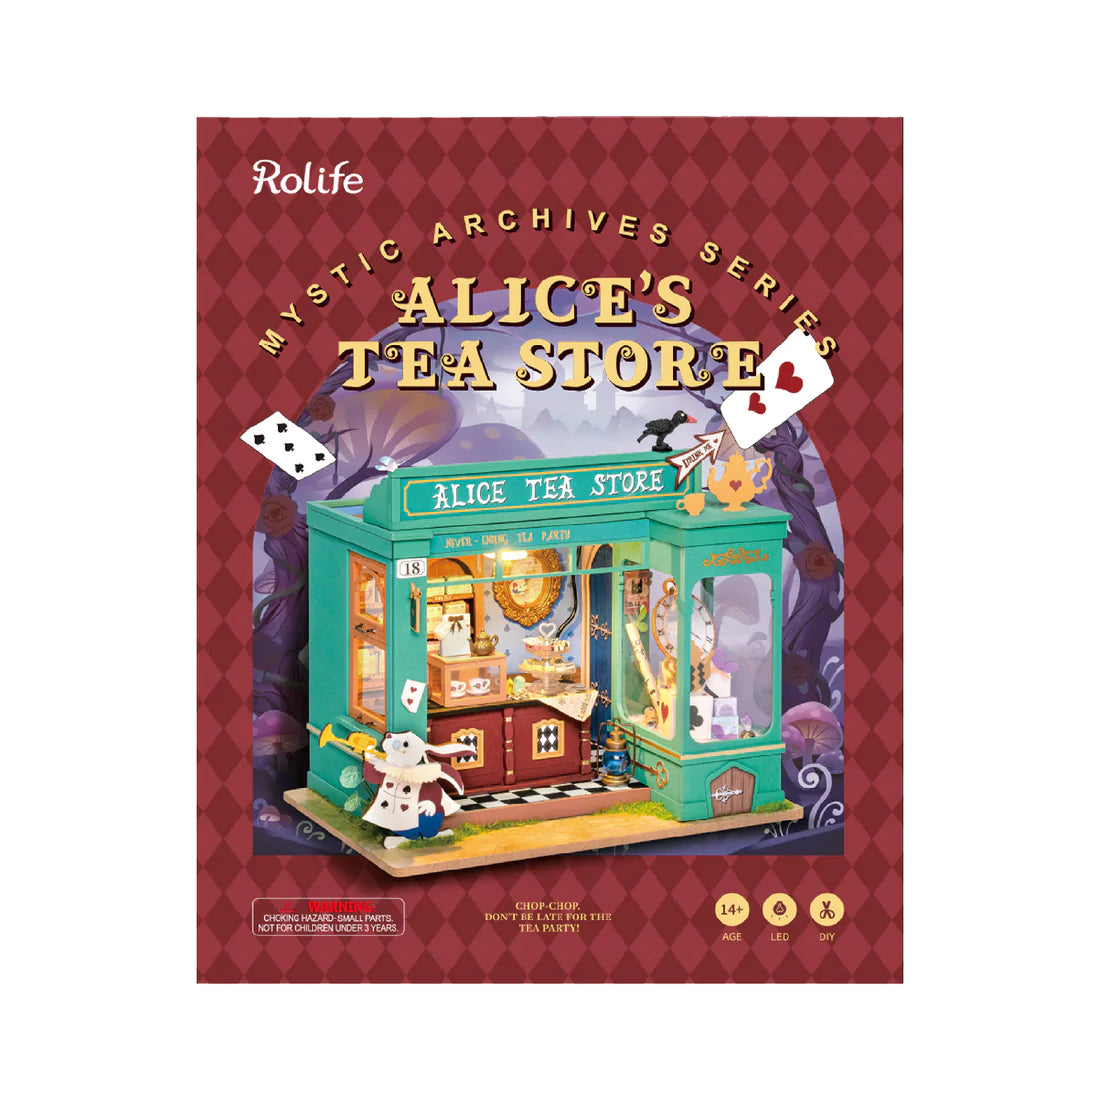 Kit diorama du magasin de thé d'Alice